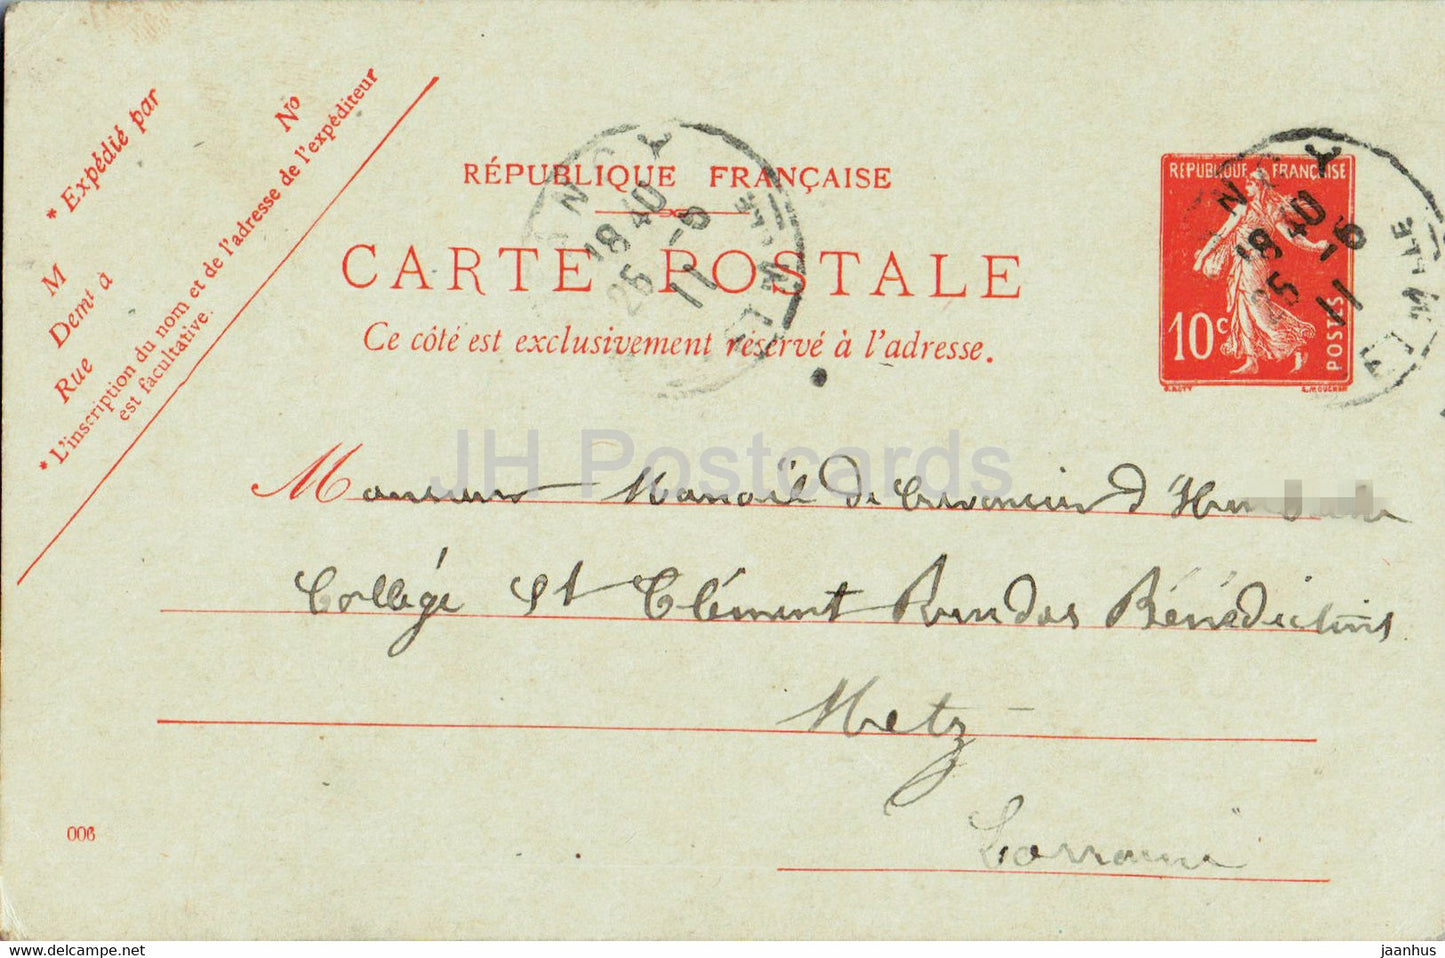 Carte Postale - postal stationery - old postcard - 1911 - France - used - JH Postcards